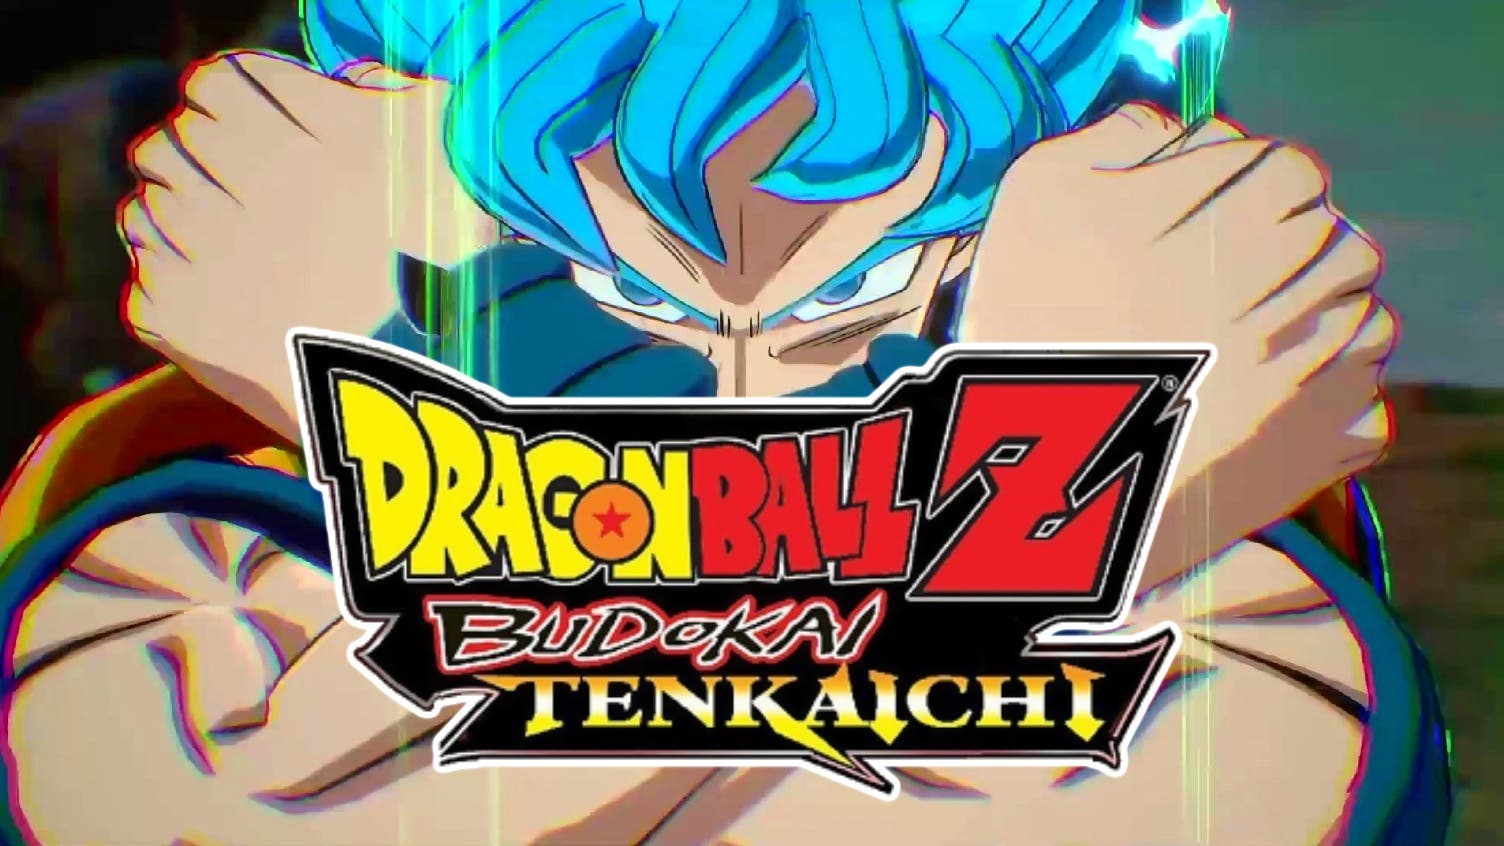 Did you know that Dragon Ball Z: Budokai Tenkaichi 4 has another “tentative” name in Japan?